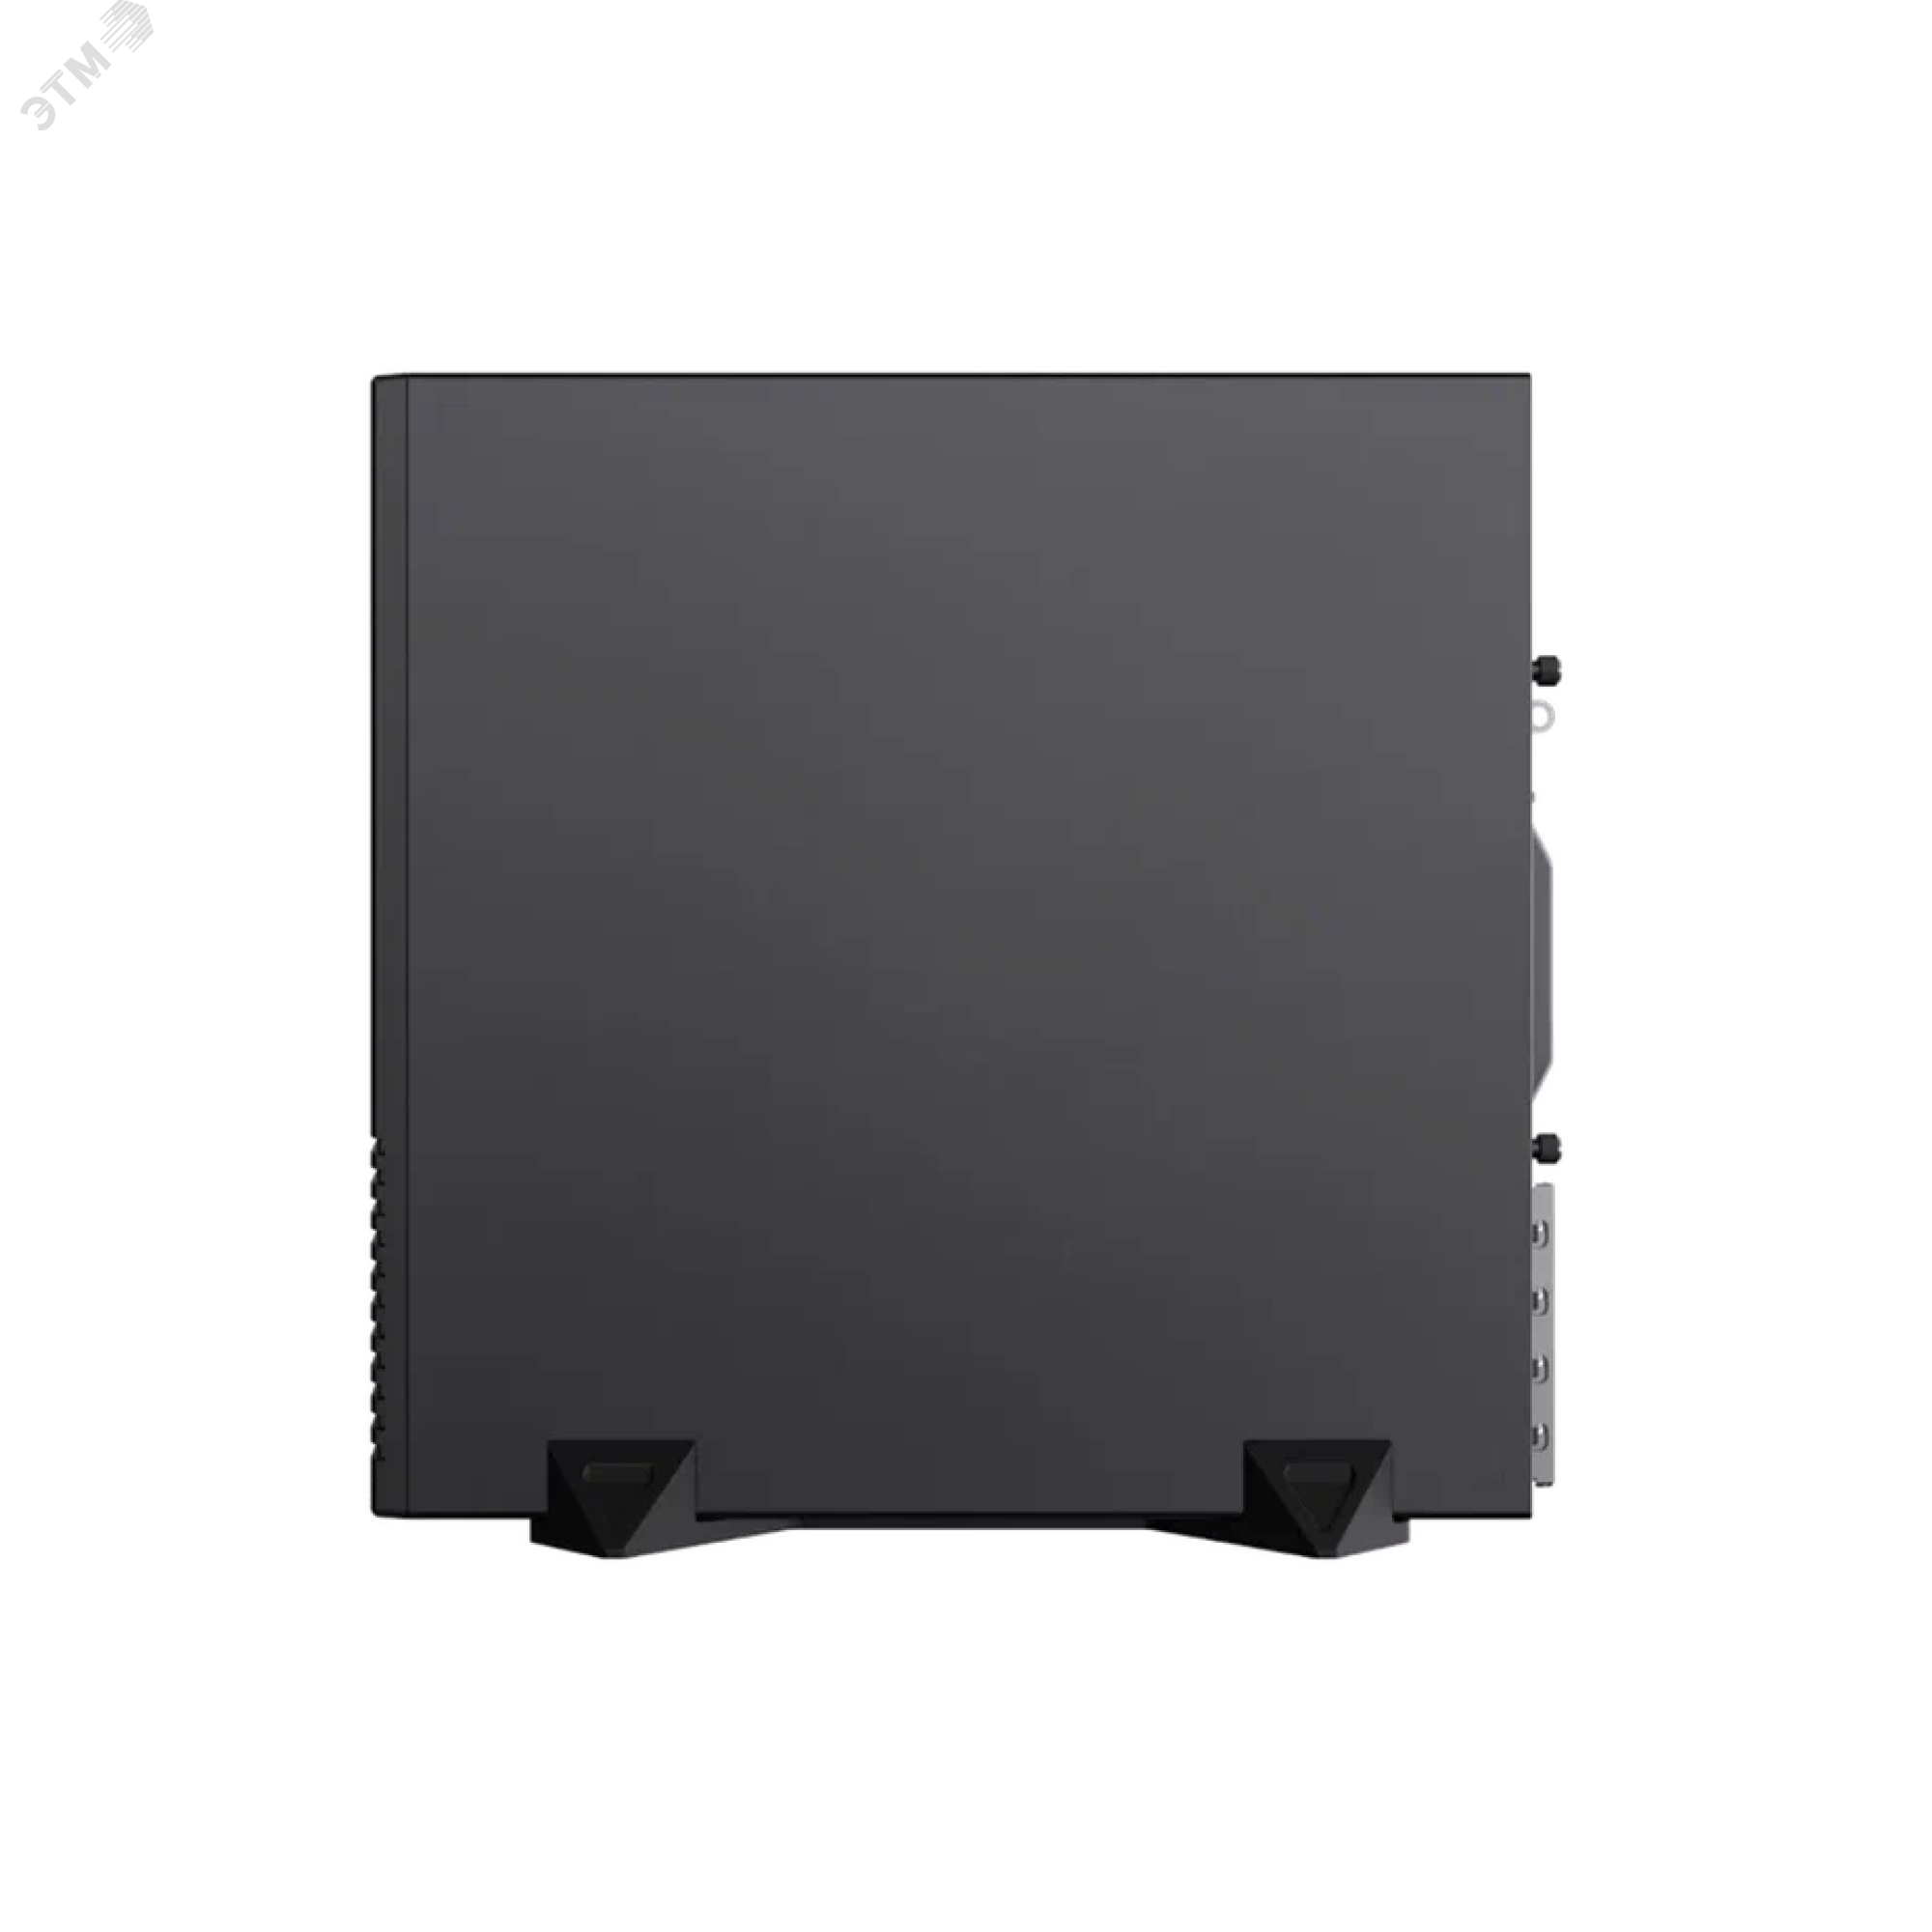 Настольный компьютер P30 K44, 1xM.2 SSD, 4x2.5''/3.5'' SSD/HDD, ОЗУ до 64 ГБ DDR4, Type-C PRO P30 K44 SFF 24 Aquarius - превью 5